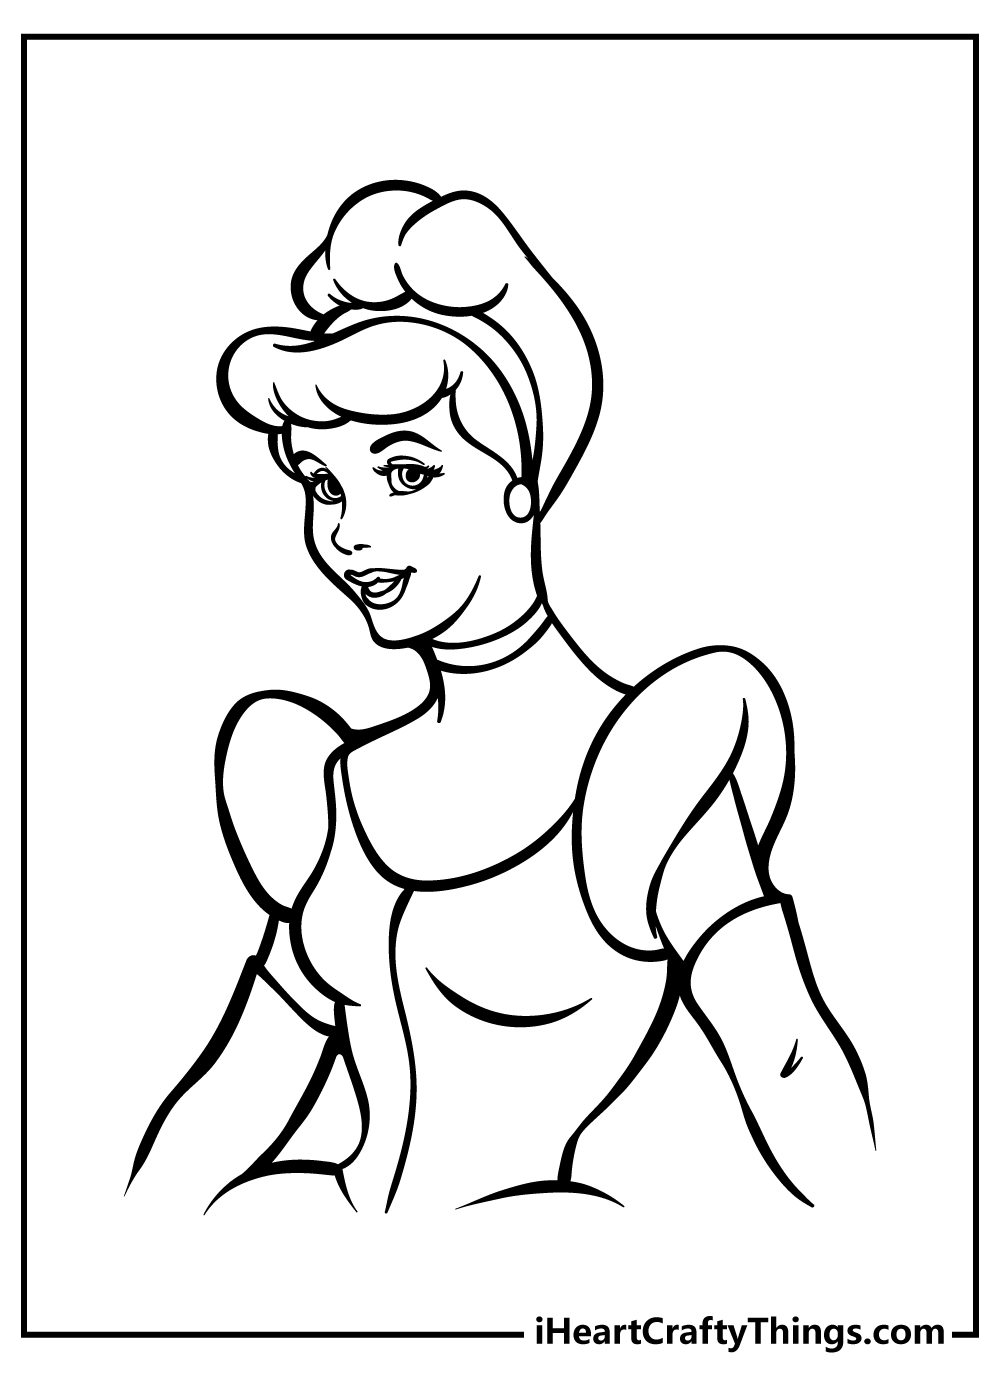 Cinderella coloring pages free printable